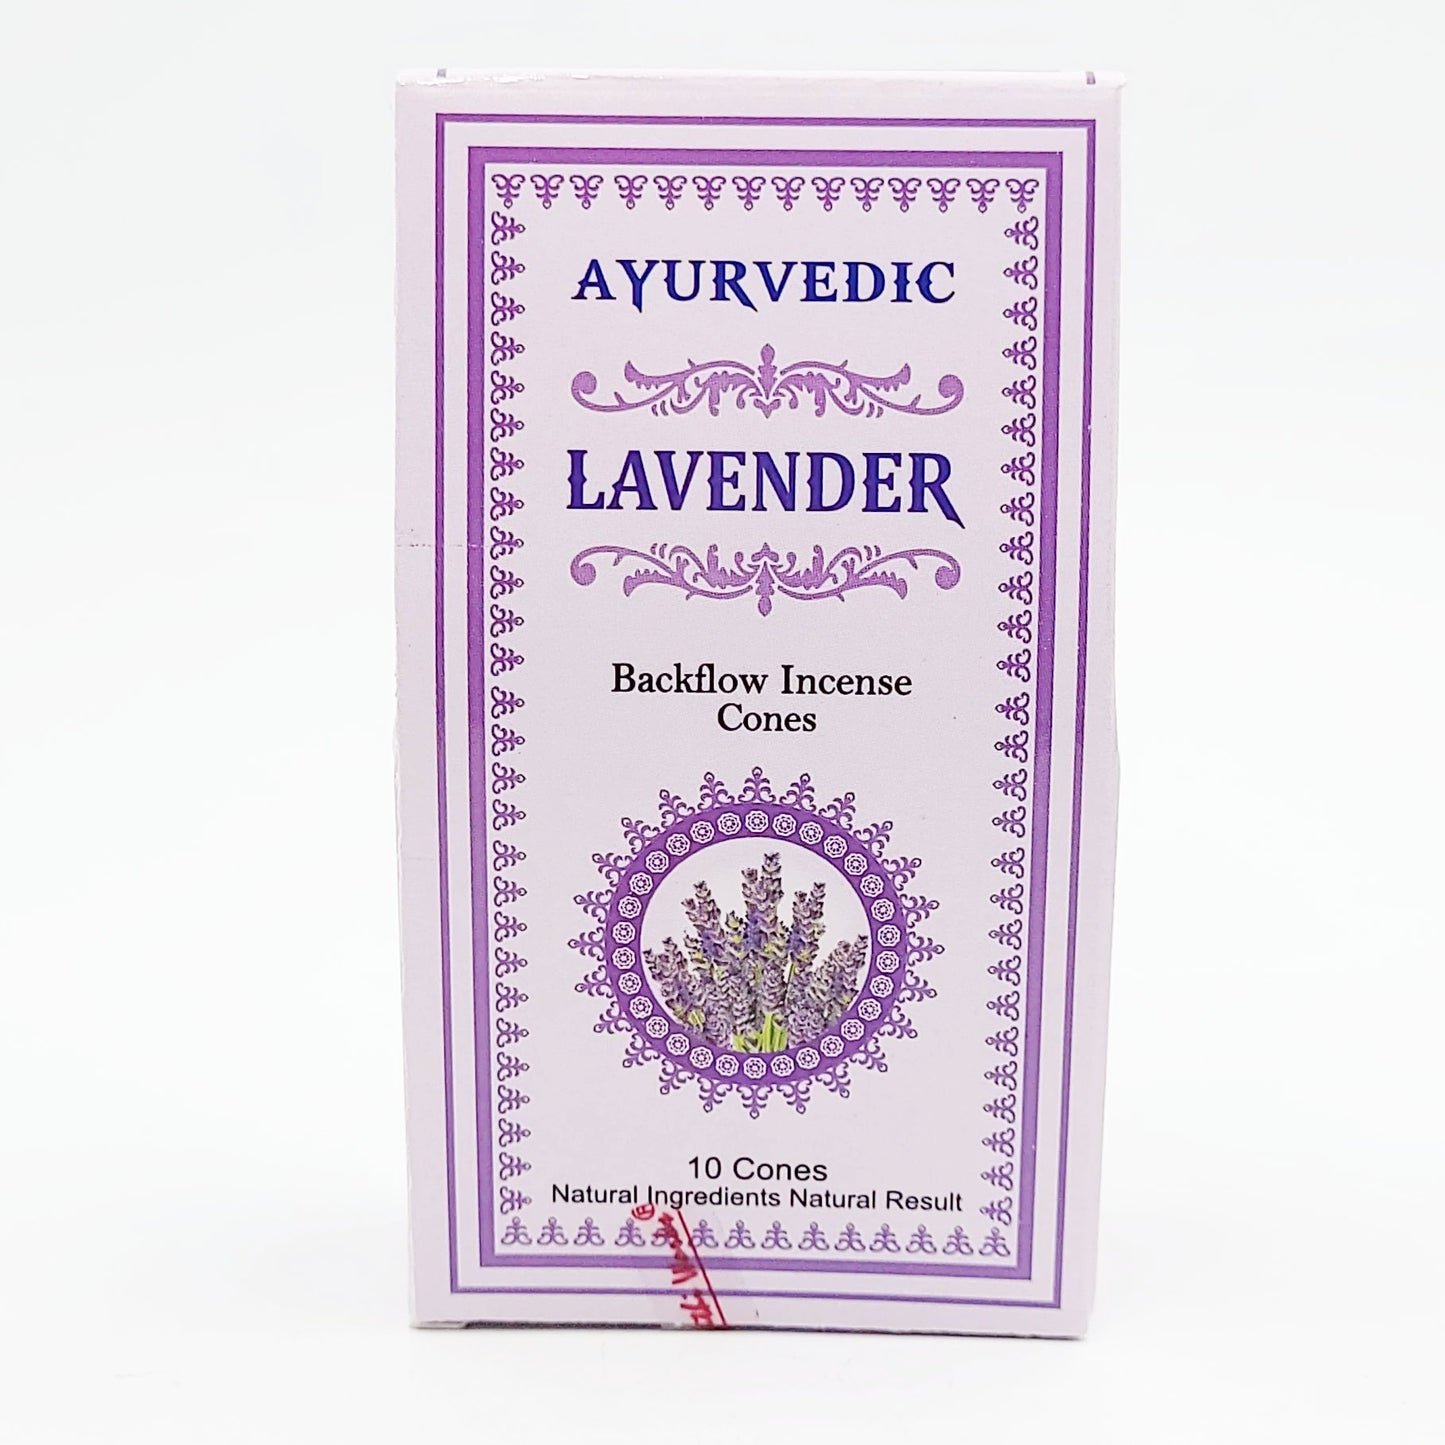 Ayurvedic Lavender Backflow Incense Cones 10 Pack - Elevated Metaphysical